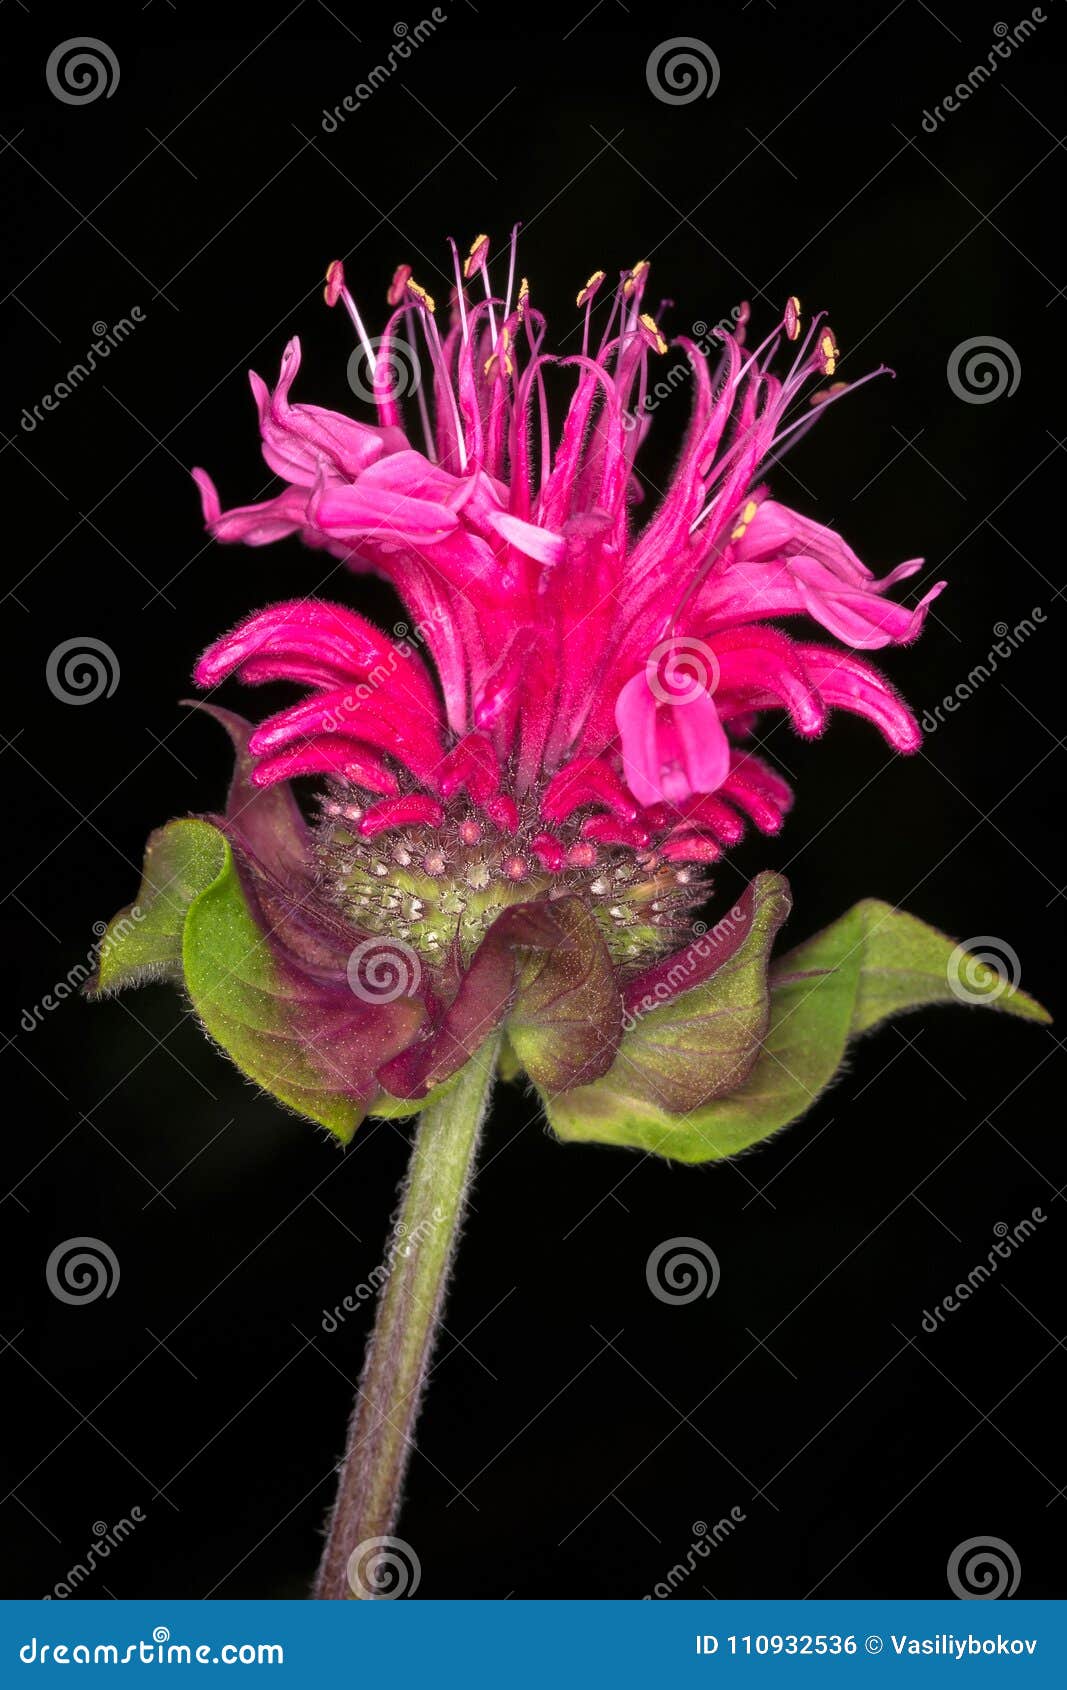 wild bergamot monarda fistulosa. blooming flower